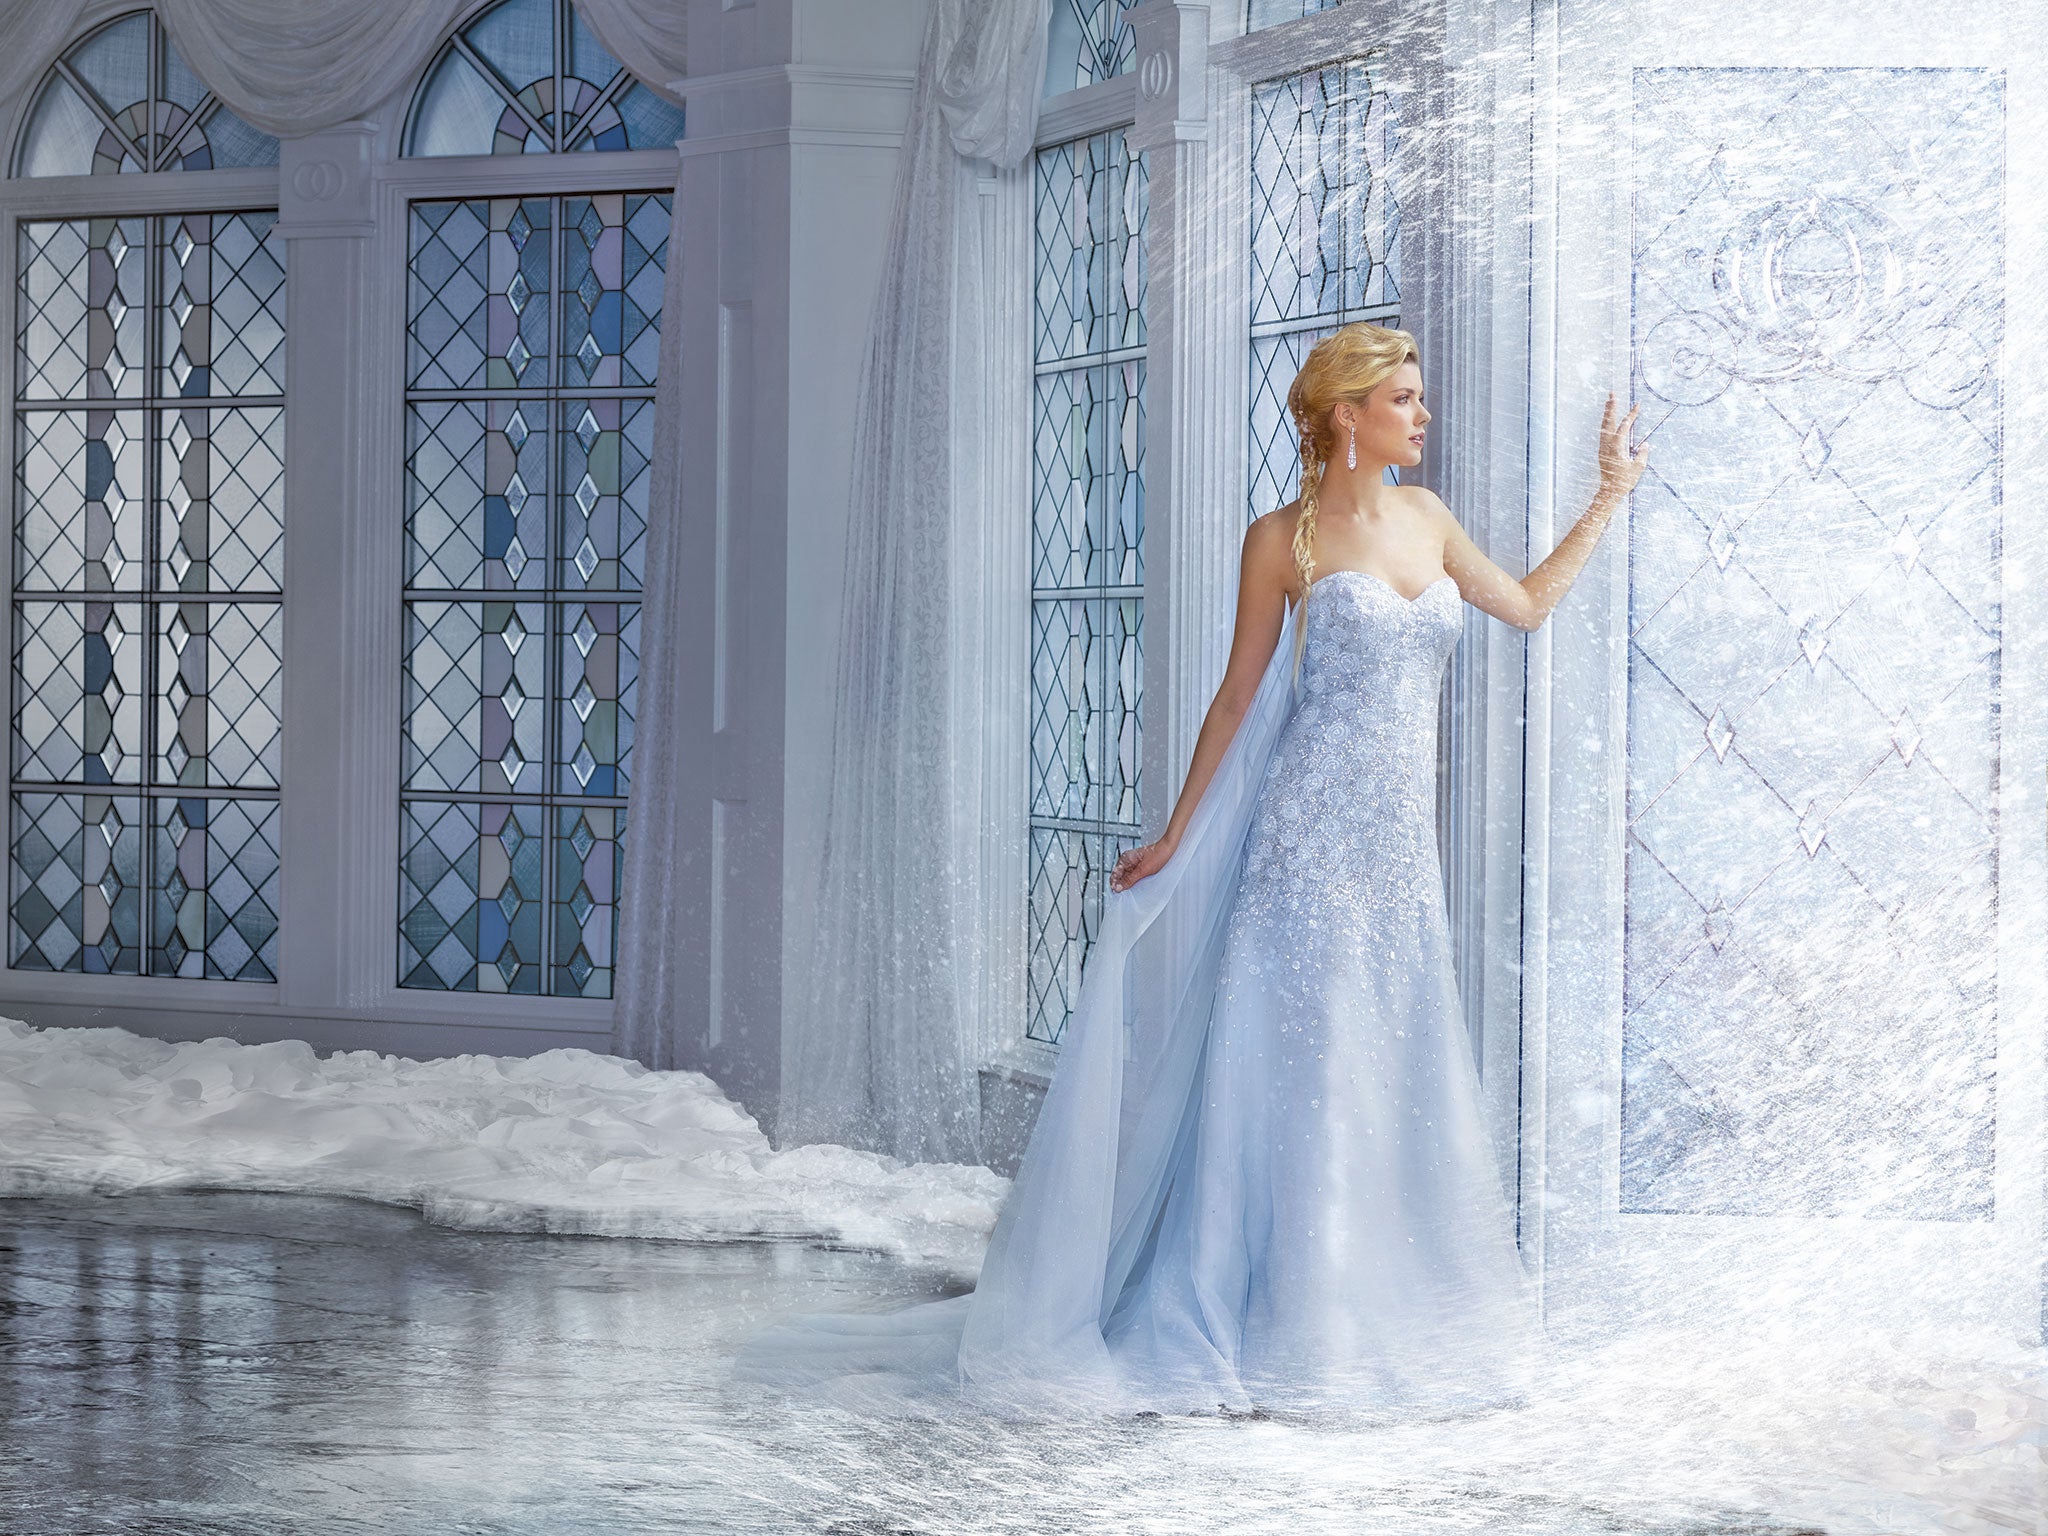 Prom Dress Ideas Inspired by Disney Princesses